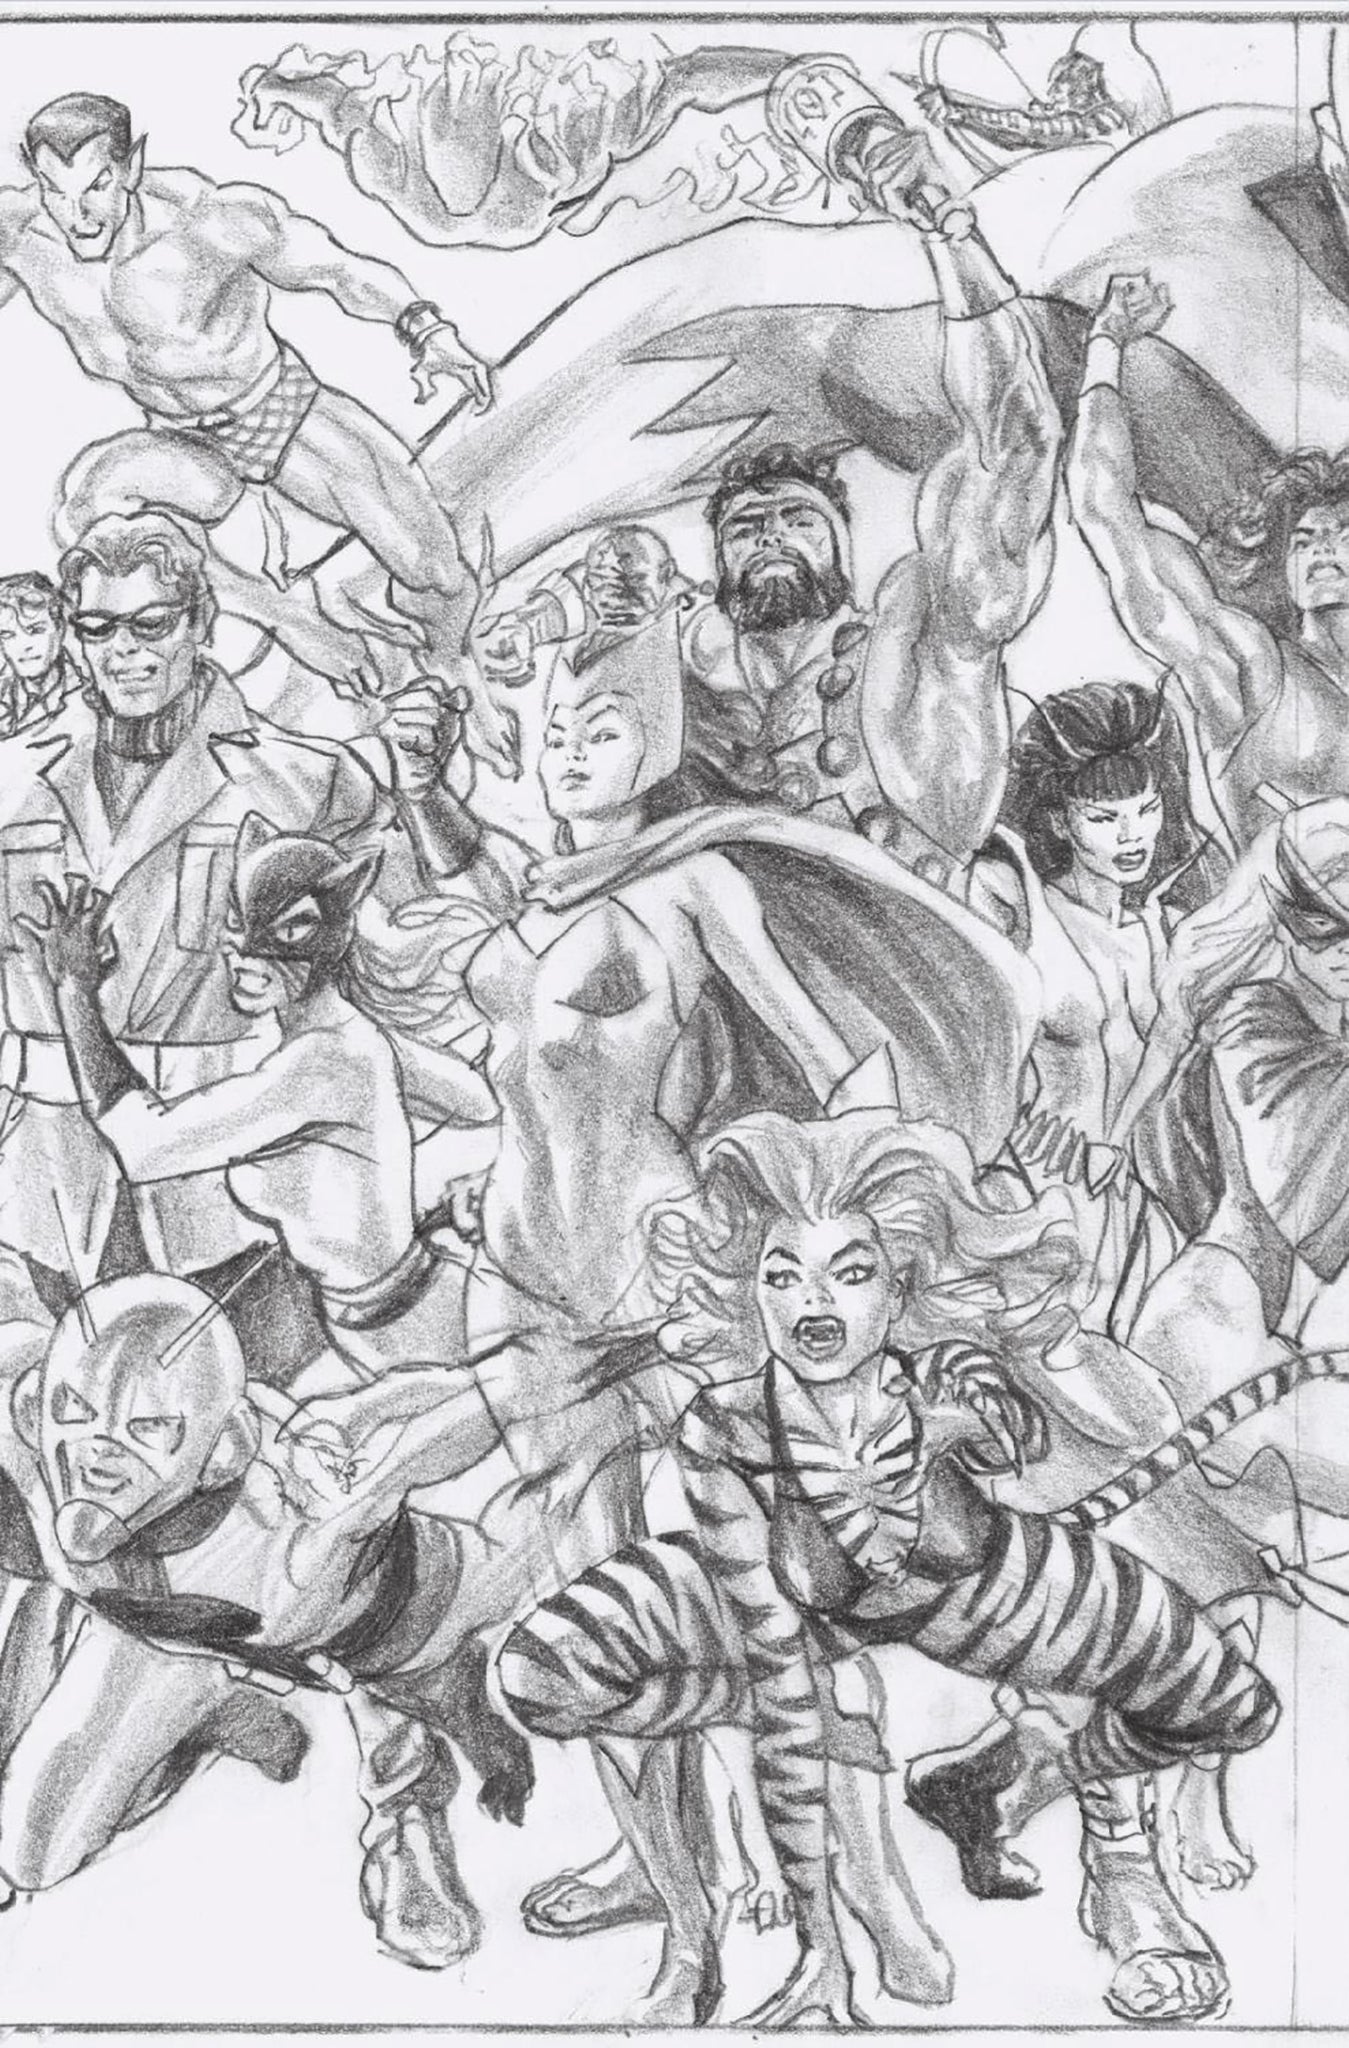 UNCANNY AVENGERS #1 ALEX ROSS 1:100 Connecting Avengers Virgin Sketch Ratio Variant Part A